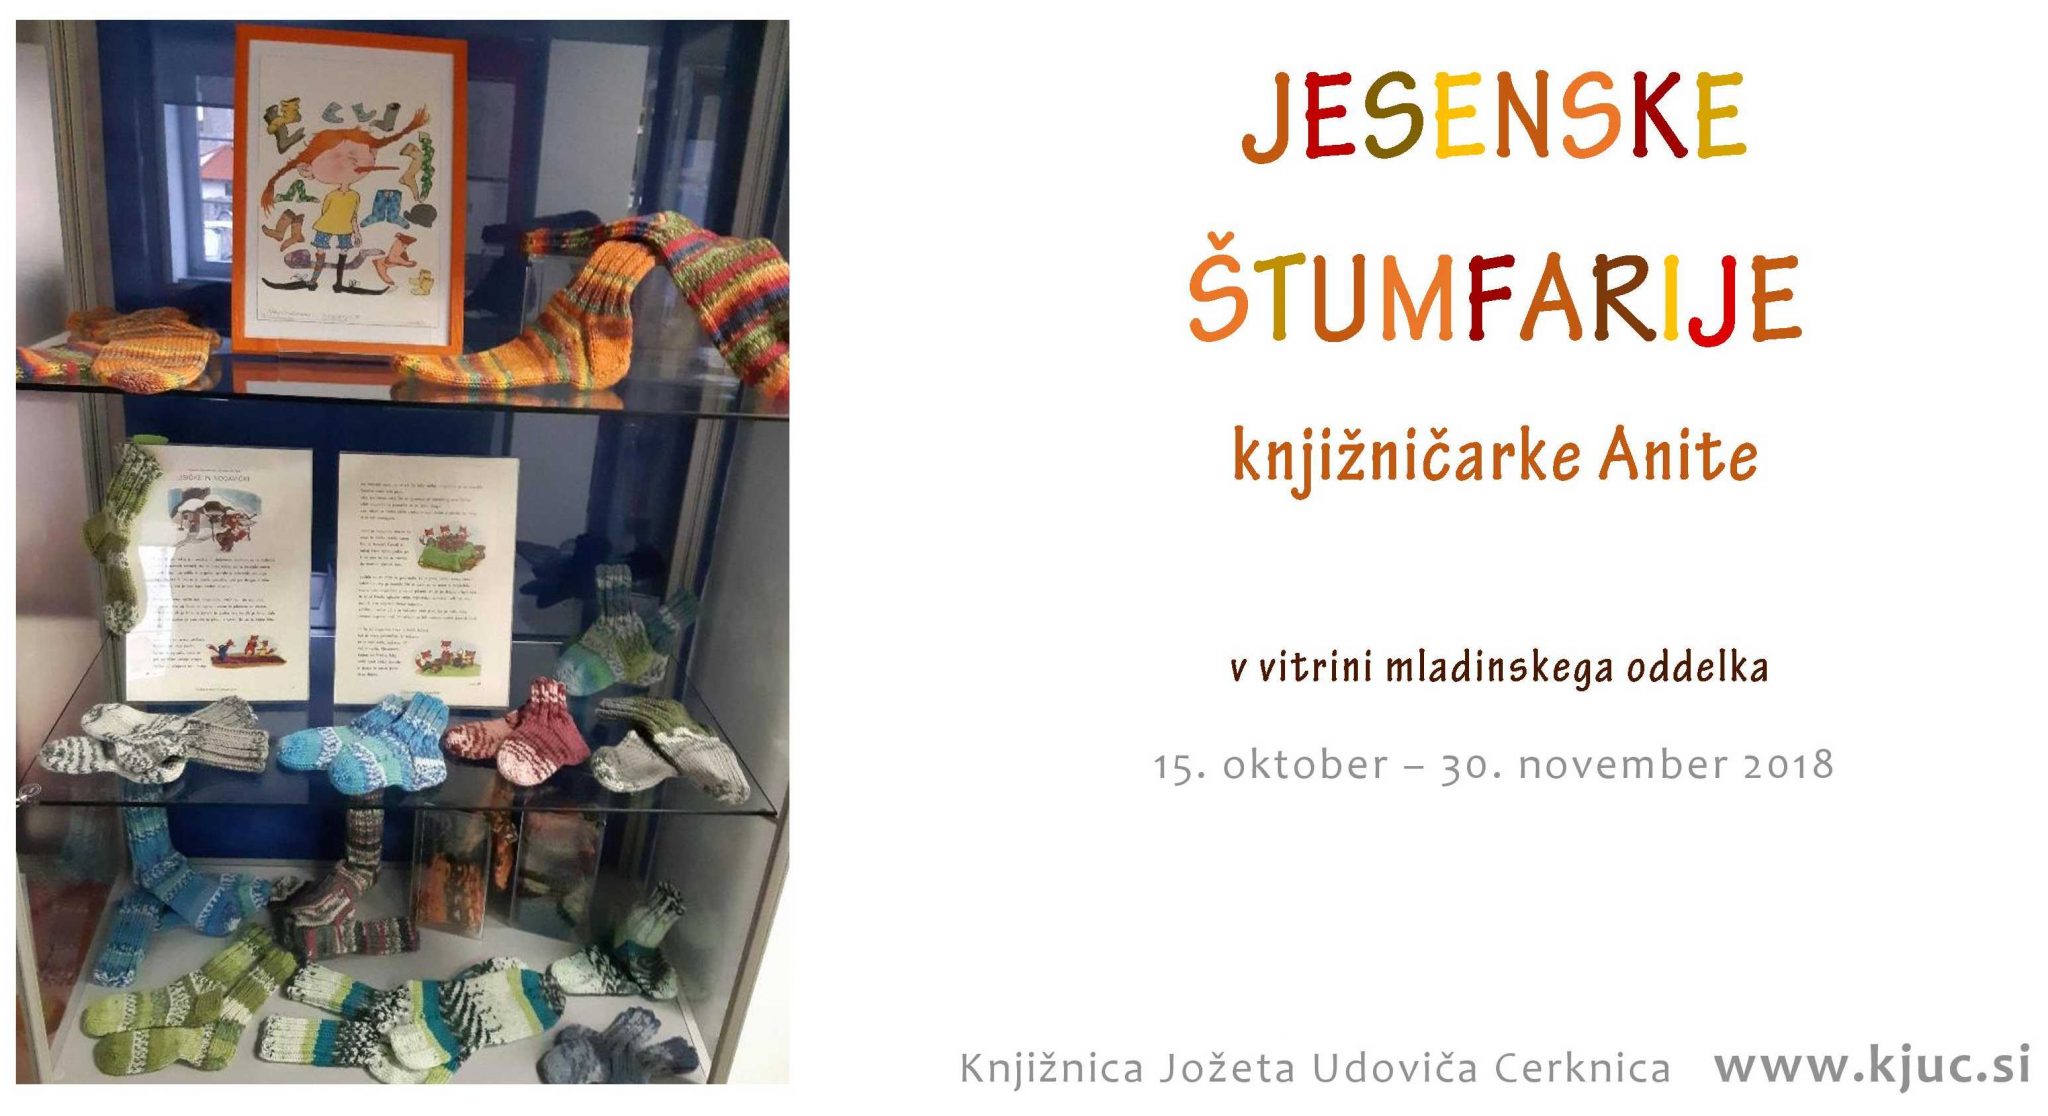 cover 4 - Jesenske štumfarije knjižničarke Anite